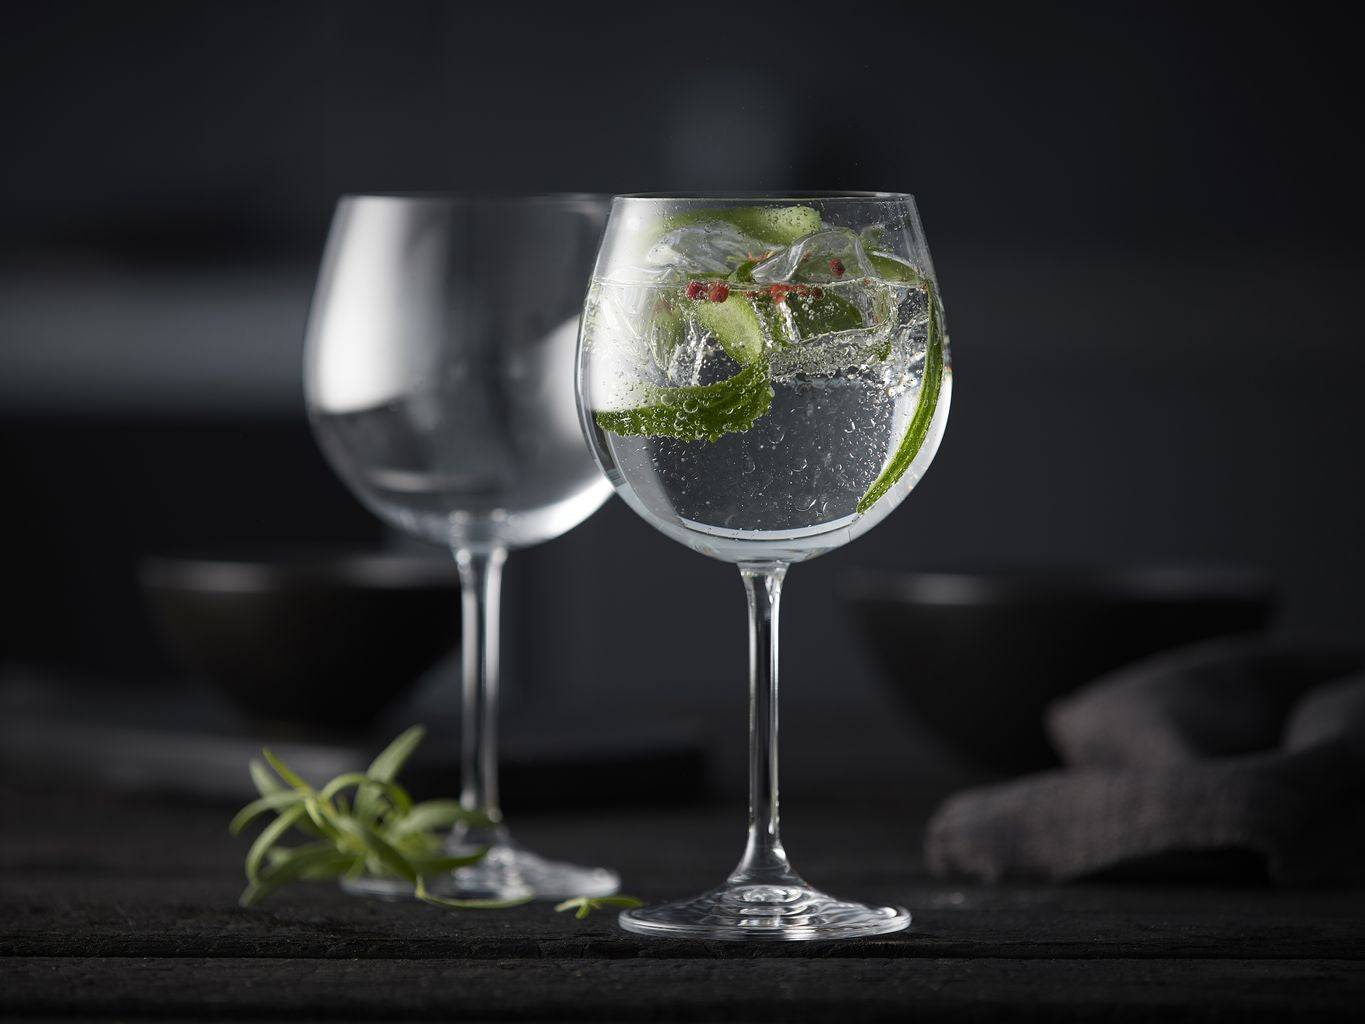 Lyngby Glas Juvel Gin & Tonic Glass 57 Cl, 4 Pcs.